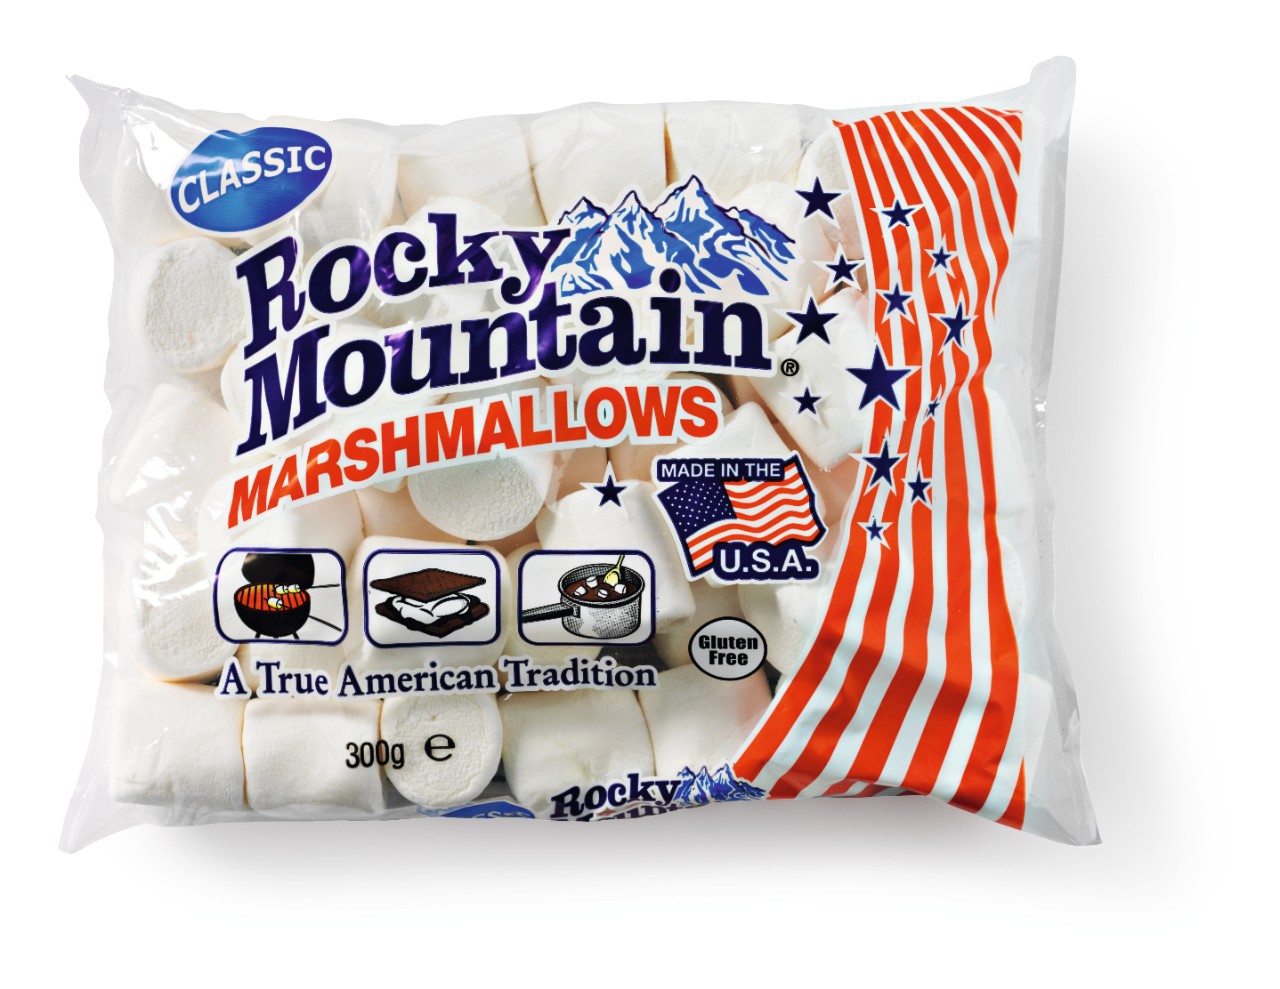 Marshmallows classic